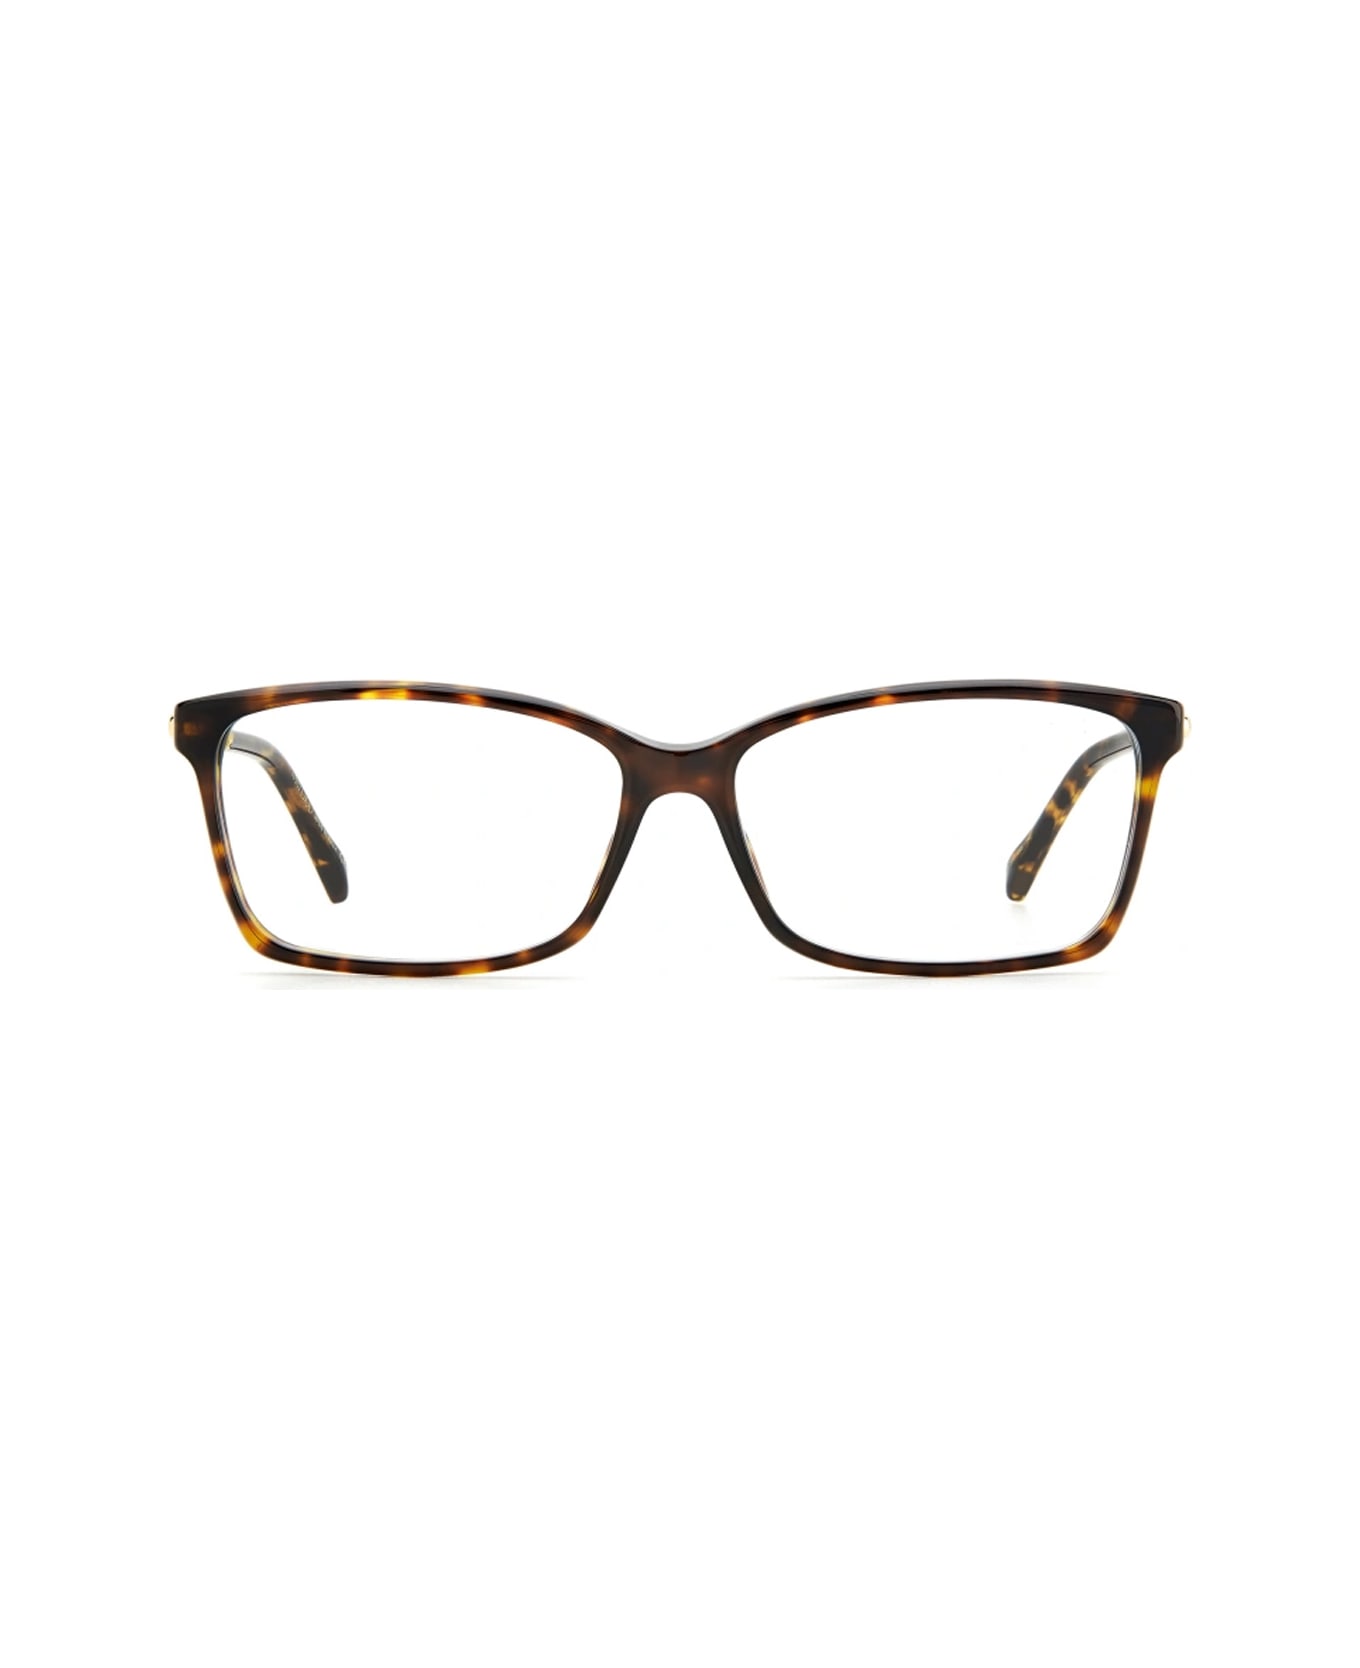 Jimmy Choo Eyewear Jc332 086/14 Havana Glasses - Marrone アイウェア